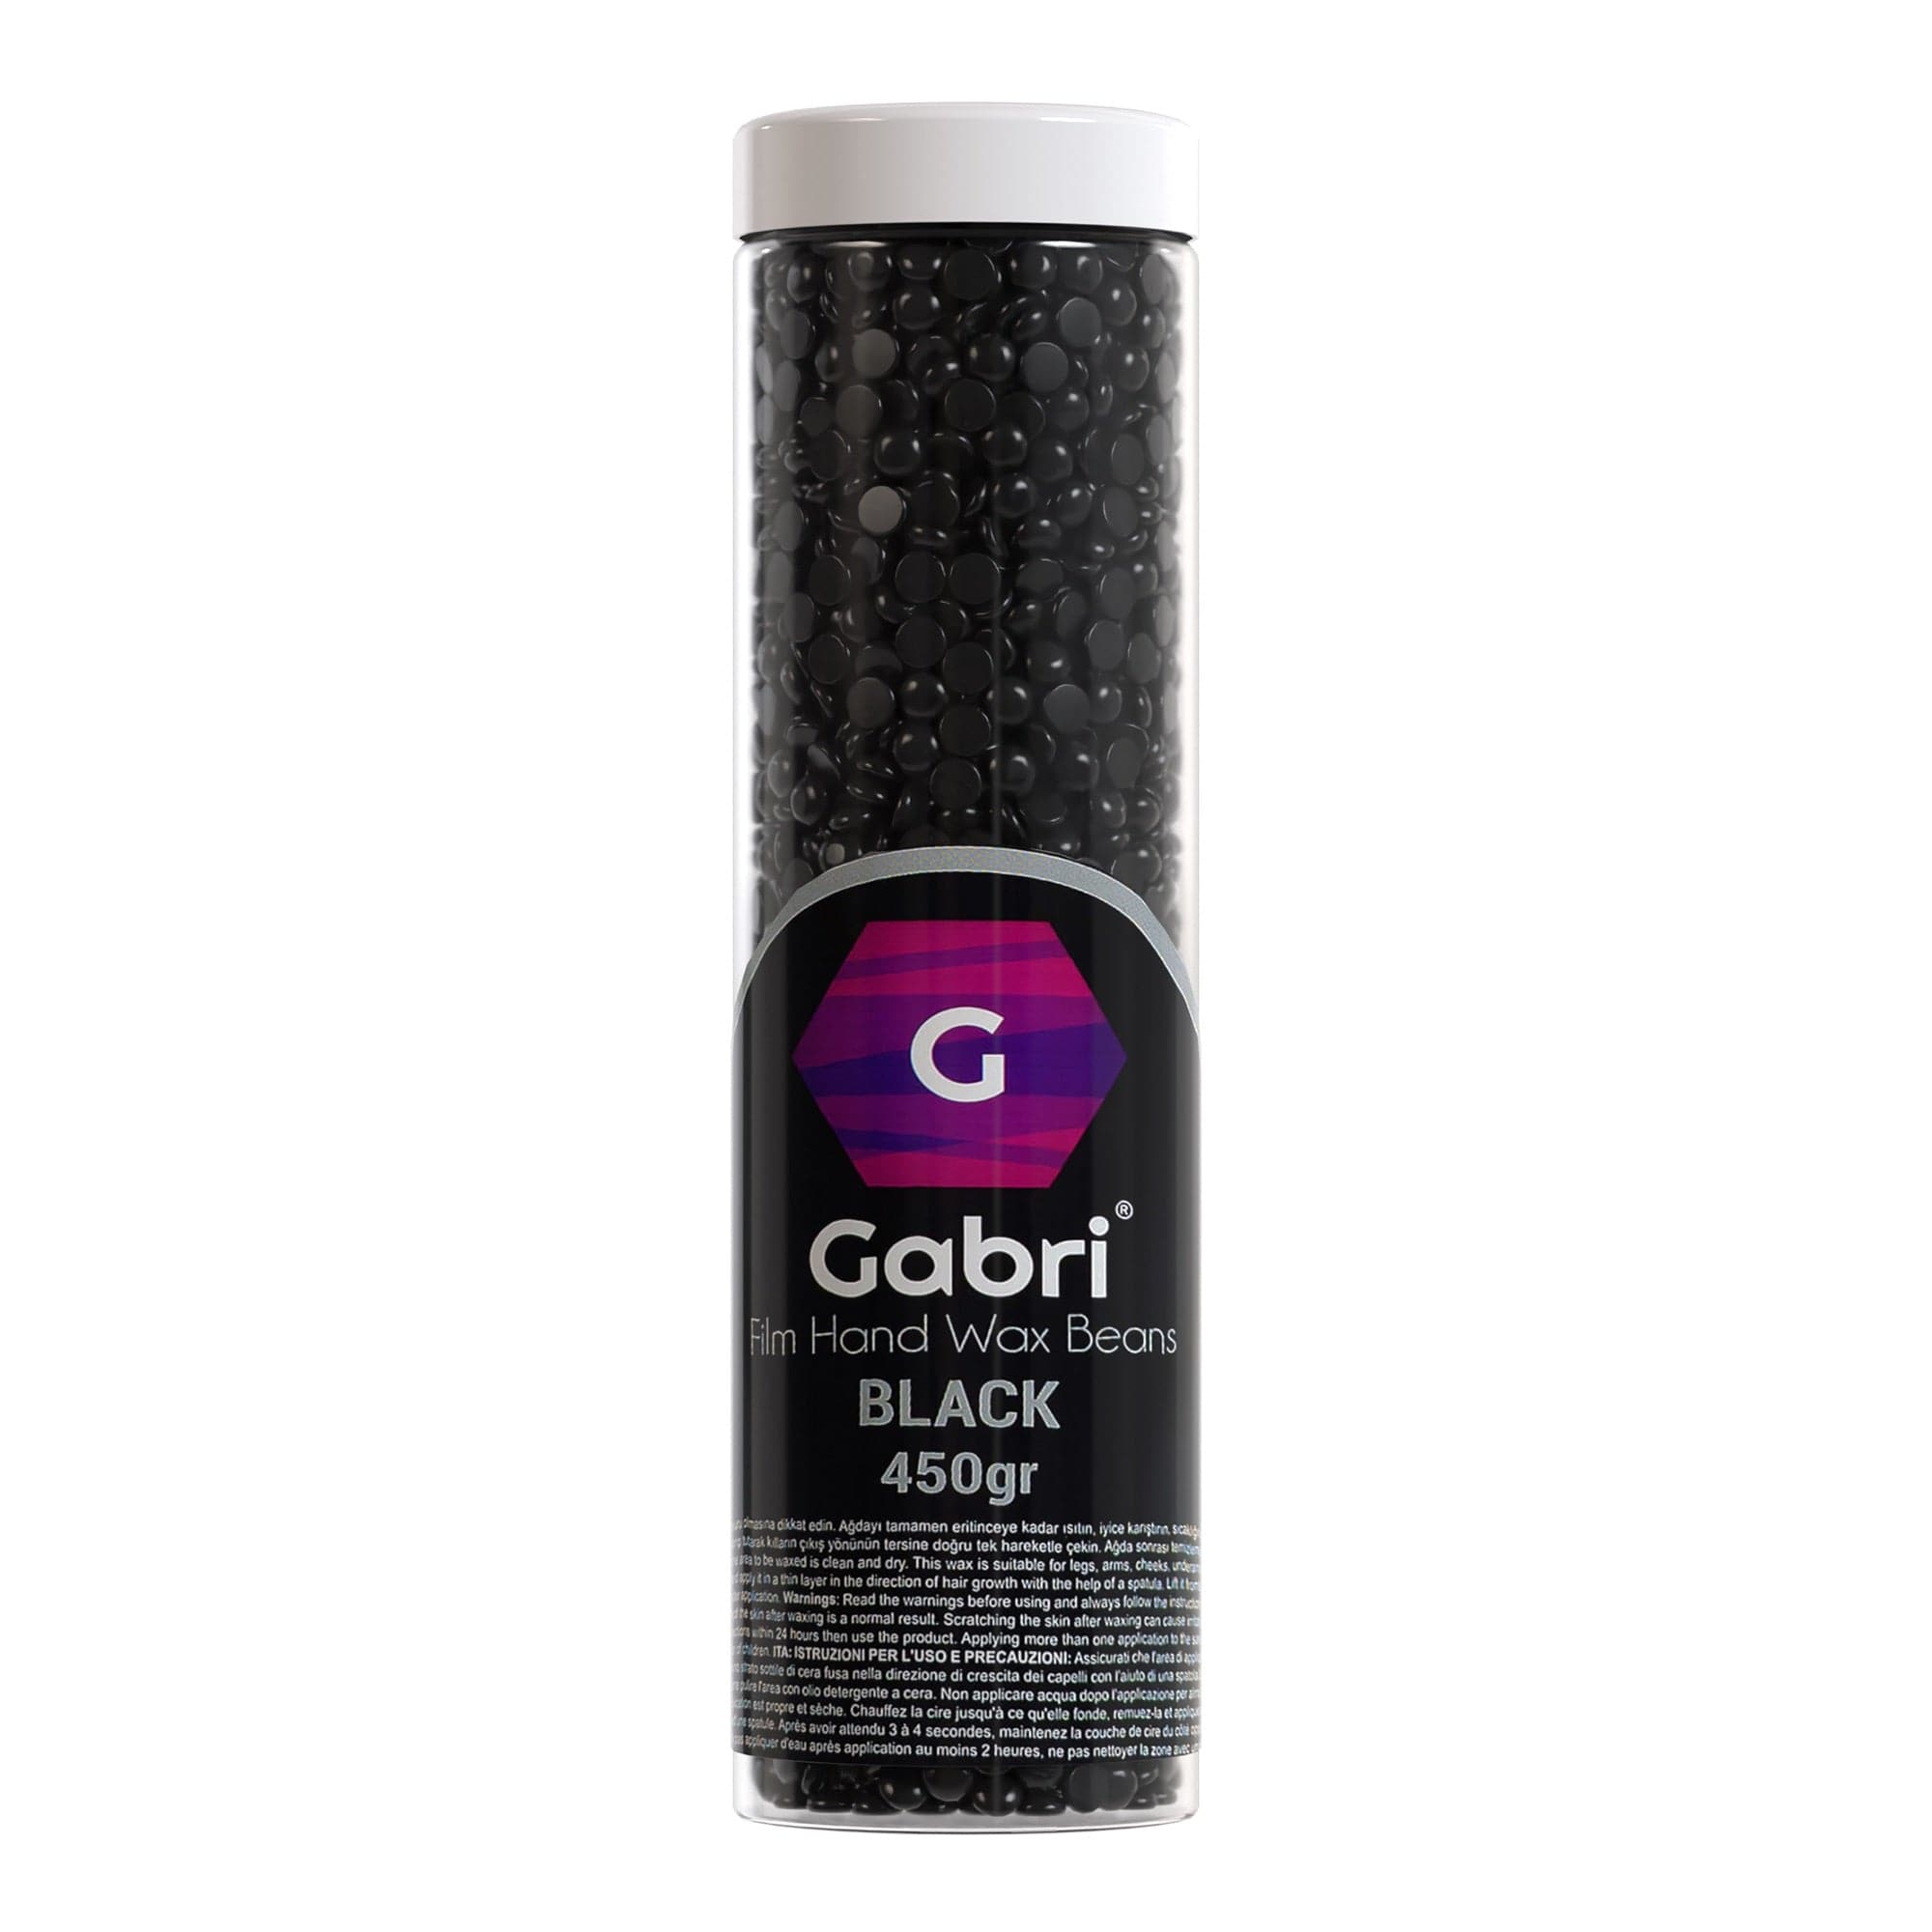 Gabri Professional - Hair Removal Hot Wax Film Hand Mask Beans Black 450g